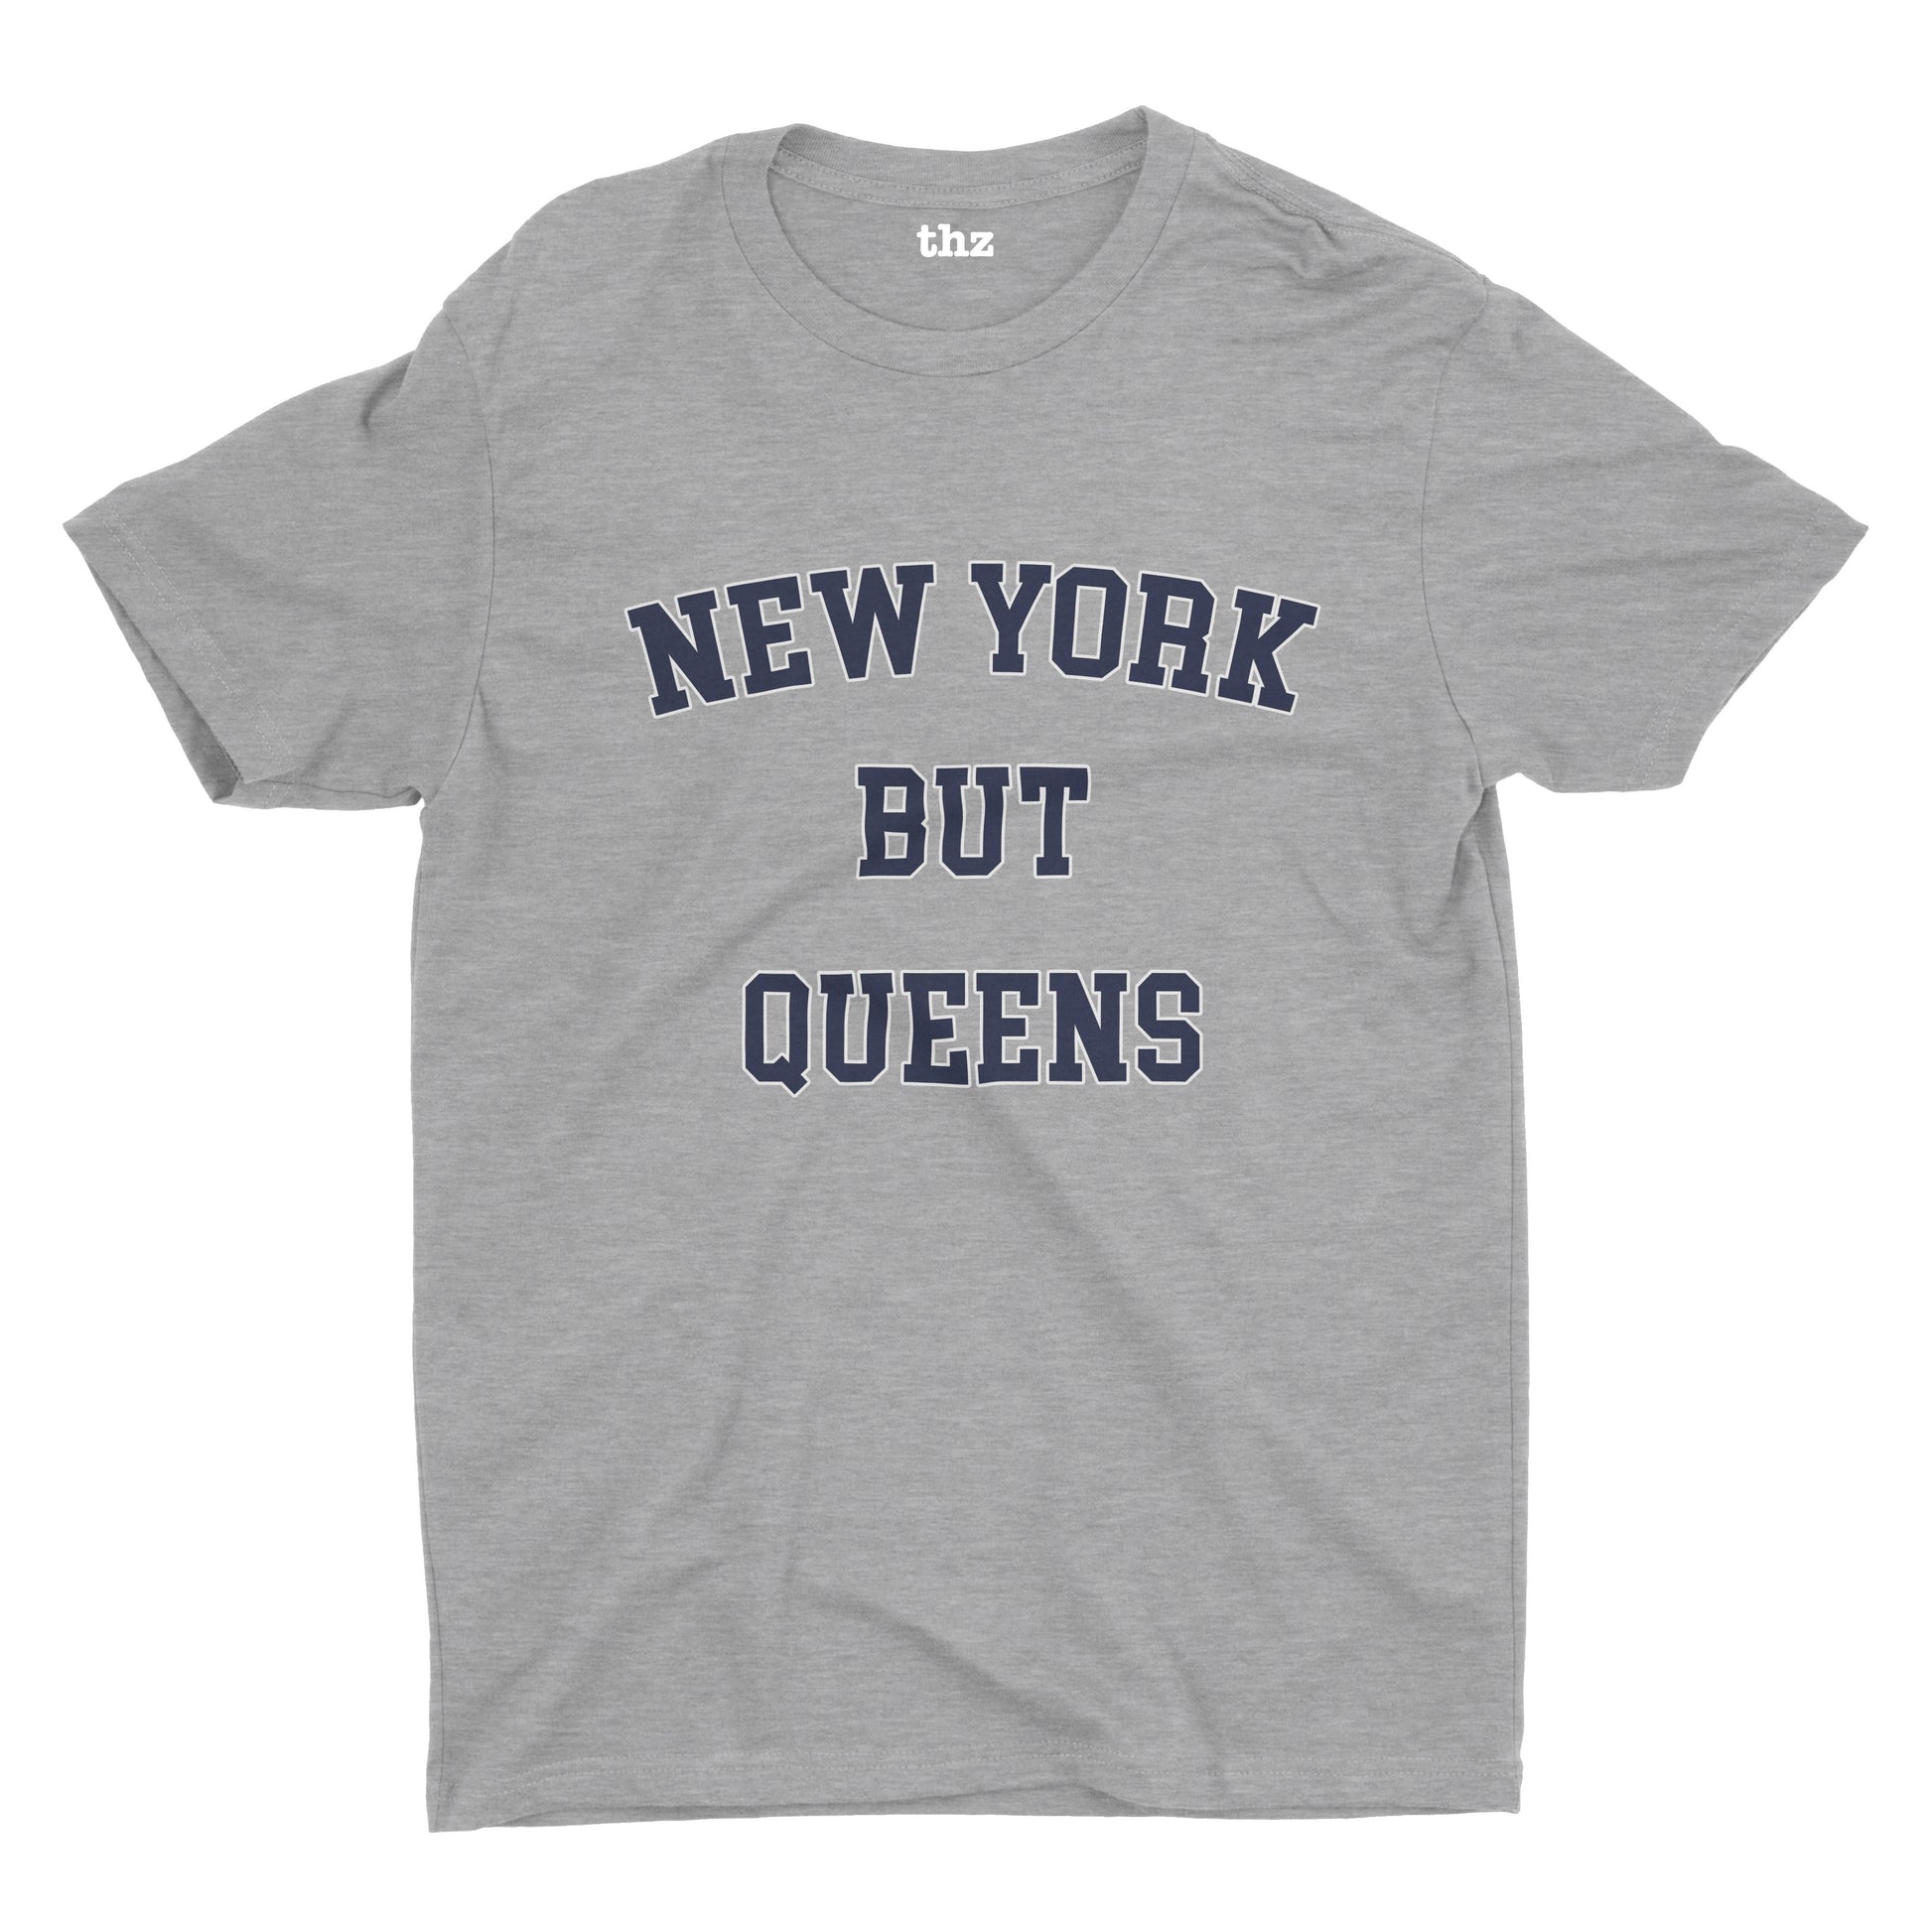 The Humped Zebra, new york but queens short sleeve grey t-shirt navy font.